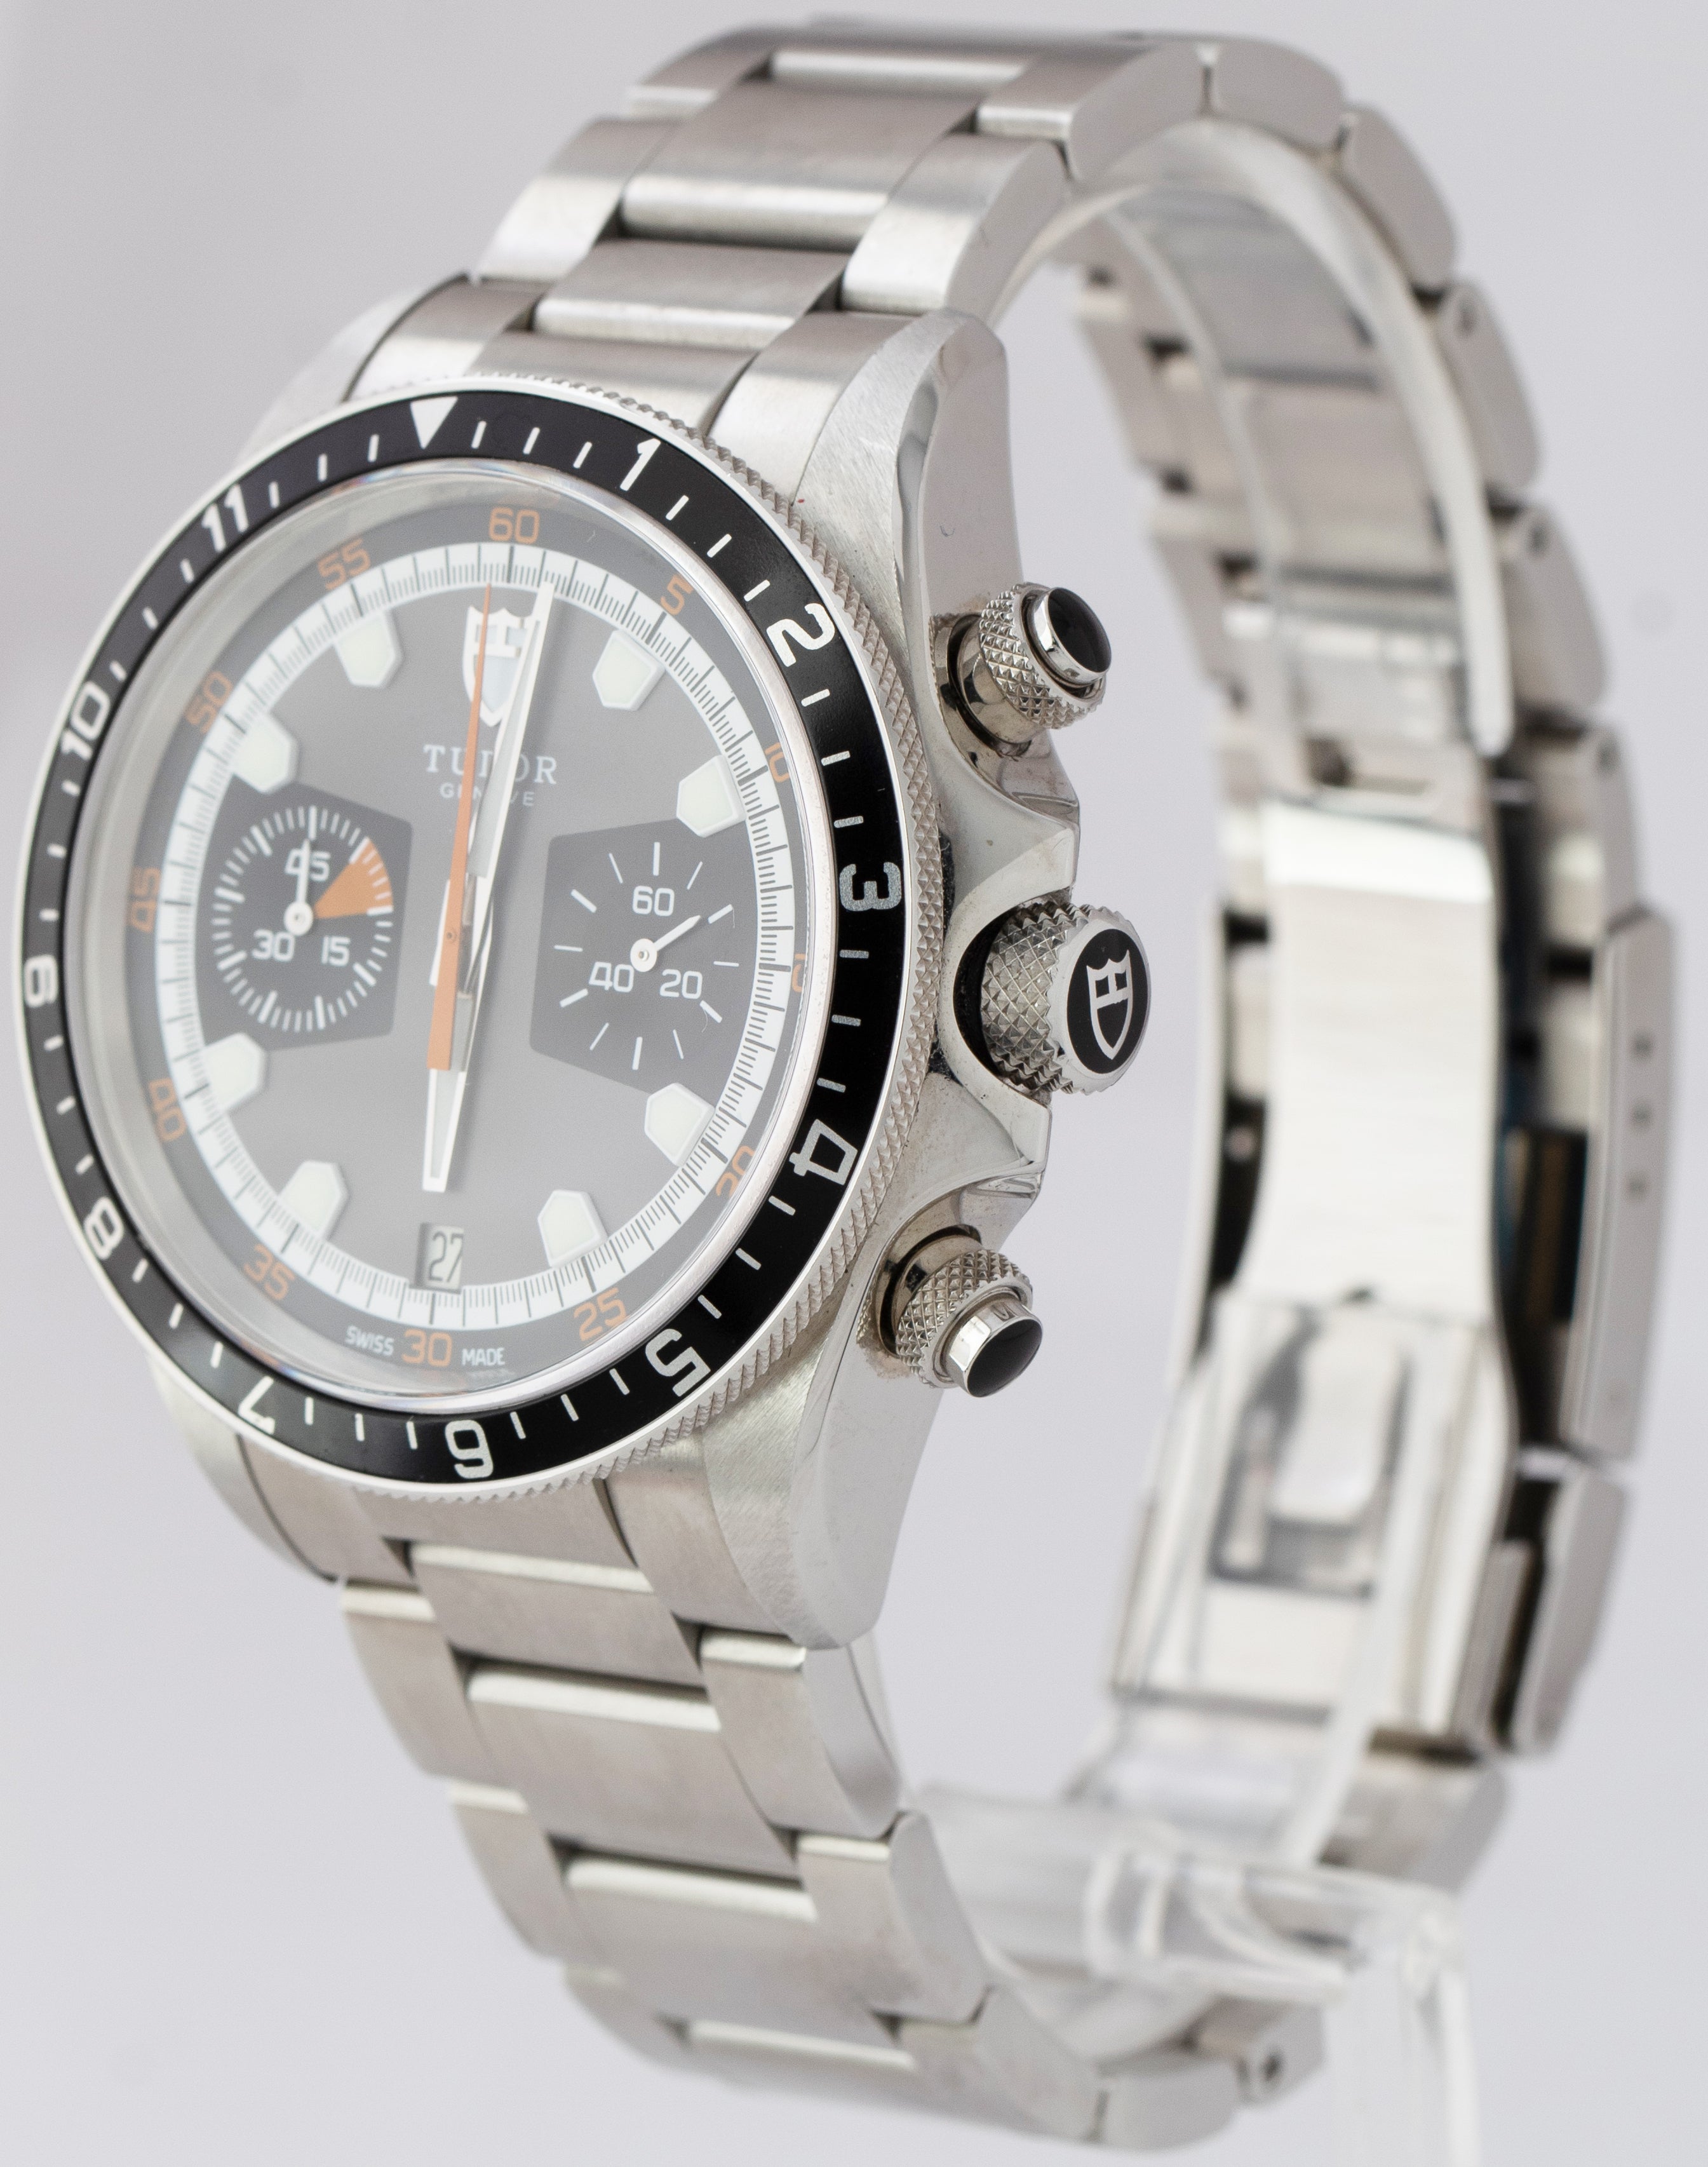 STICKERED Tudor Heritage Chrono Grey Stainless Steel Chronograph Watch 70330 N